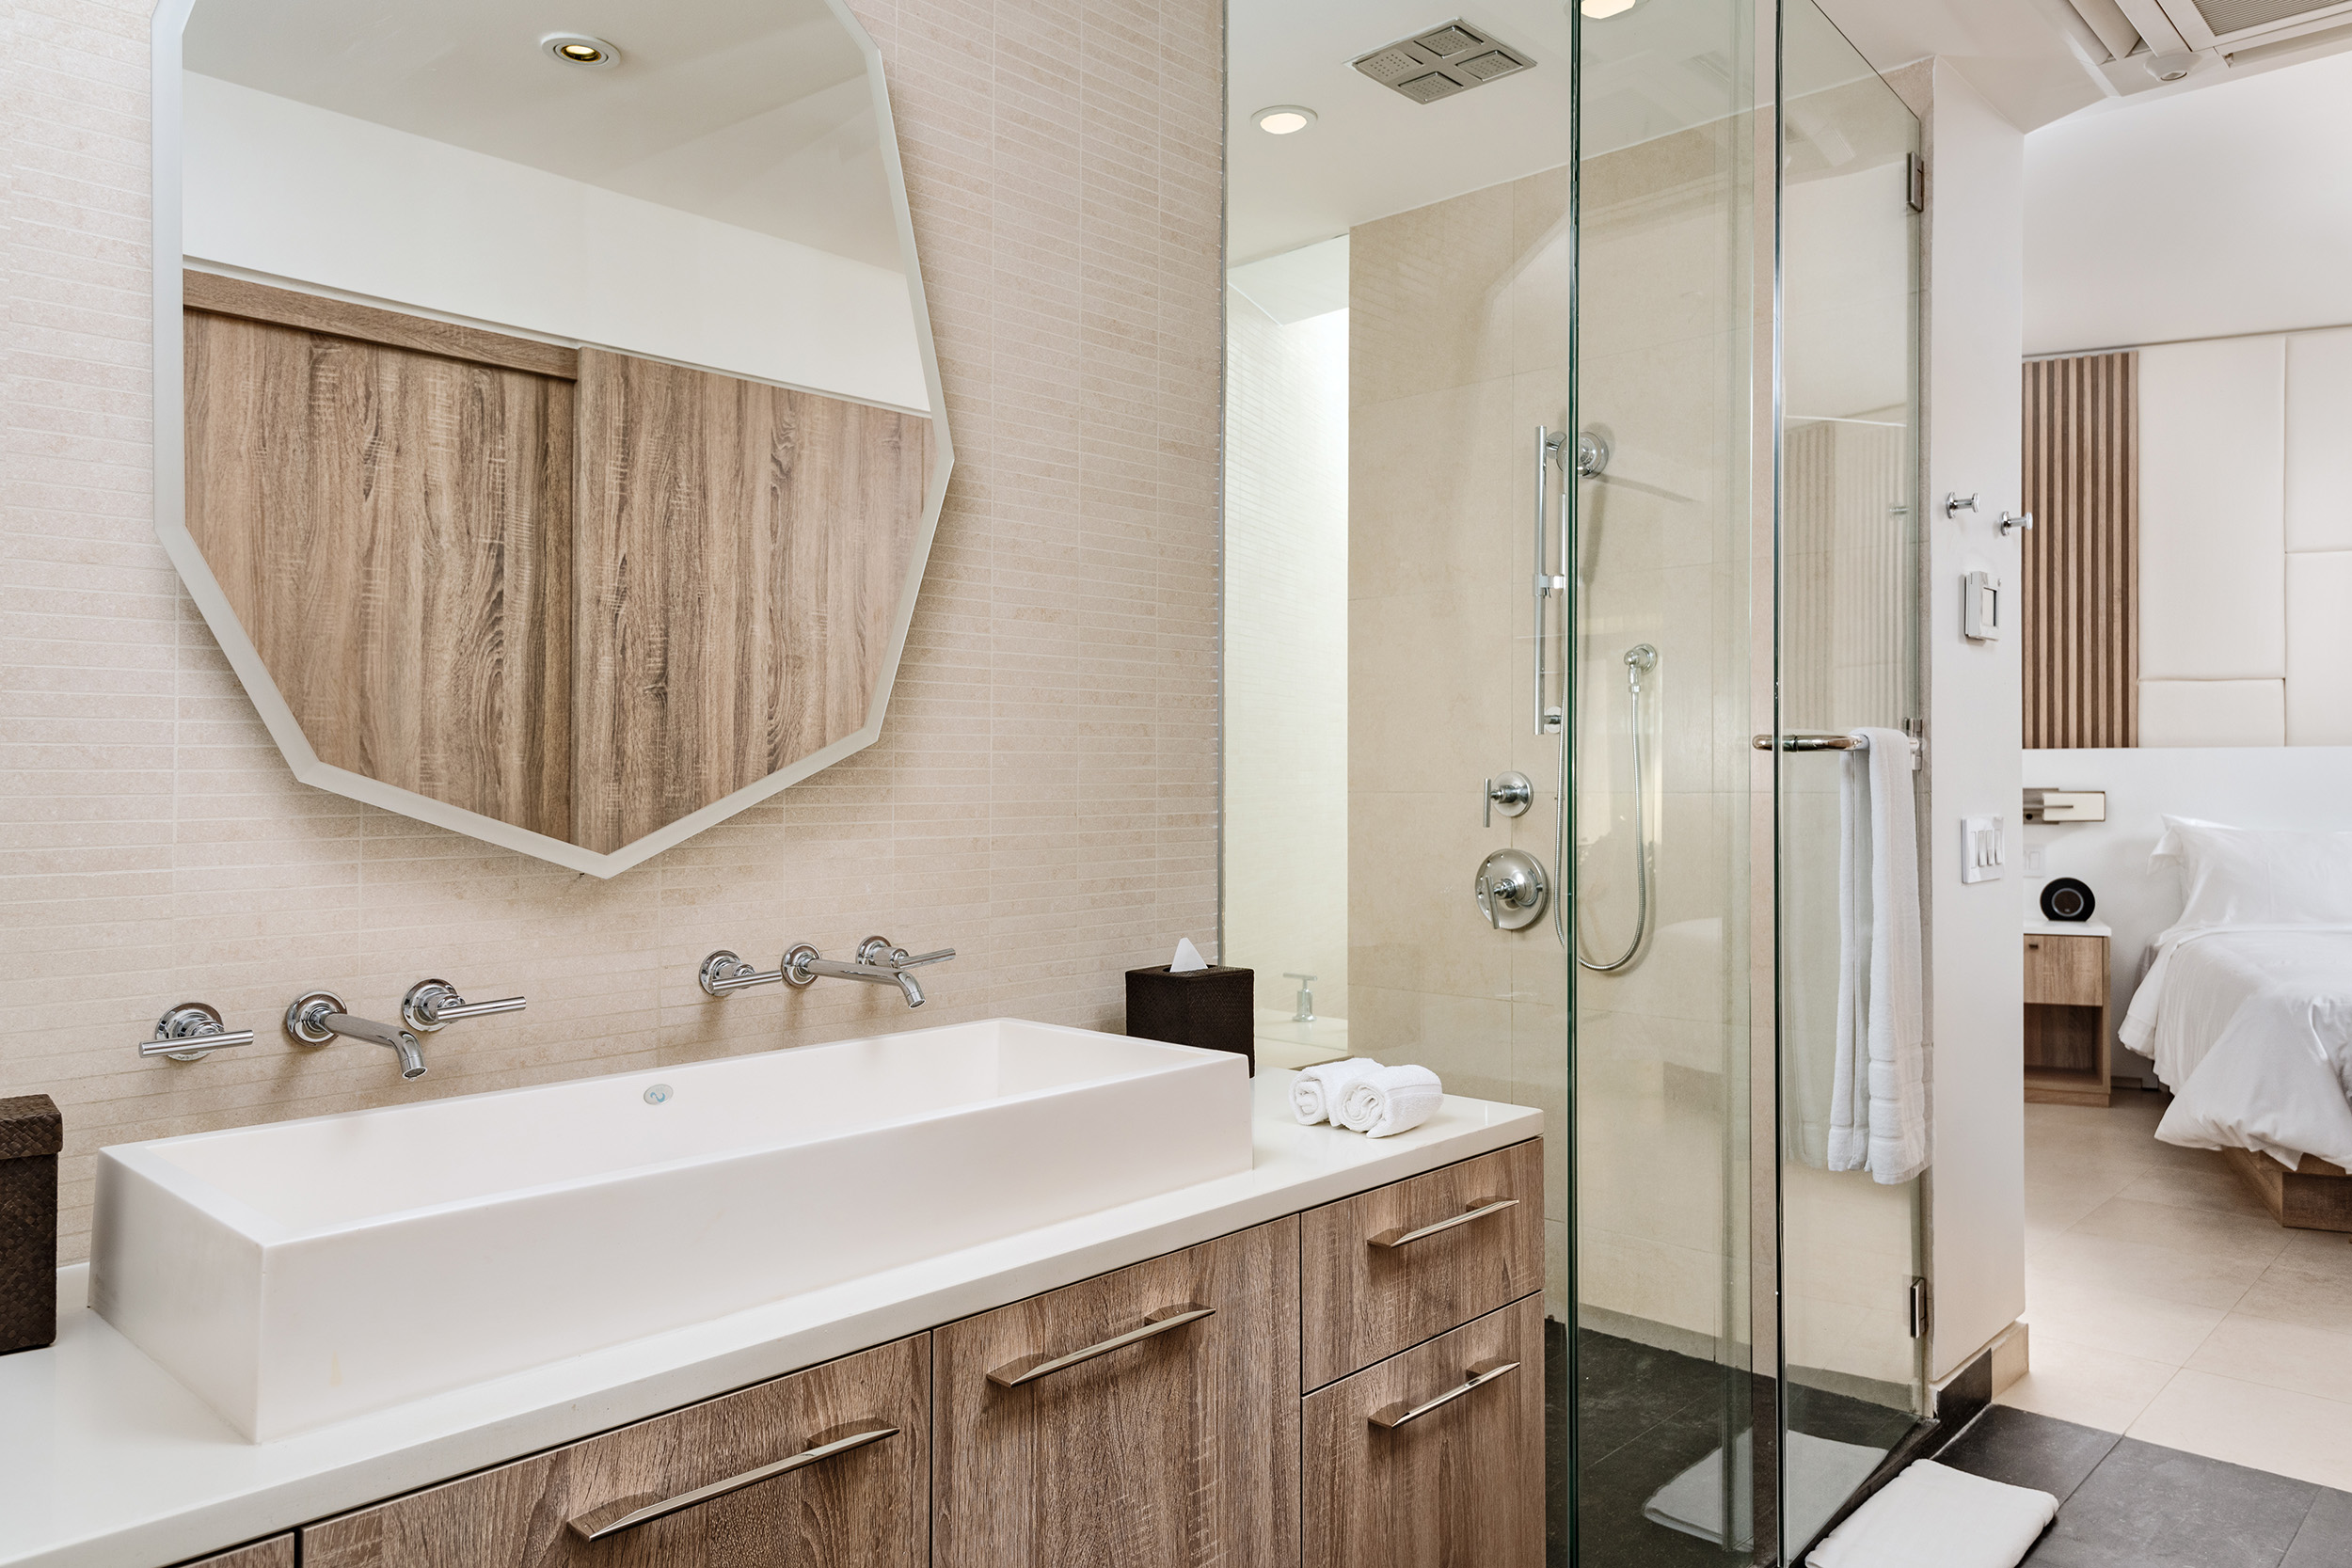 Wymara Hotel - view of a bathroom vanity